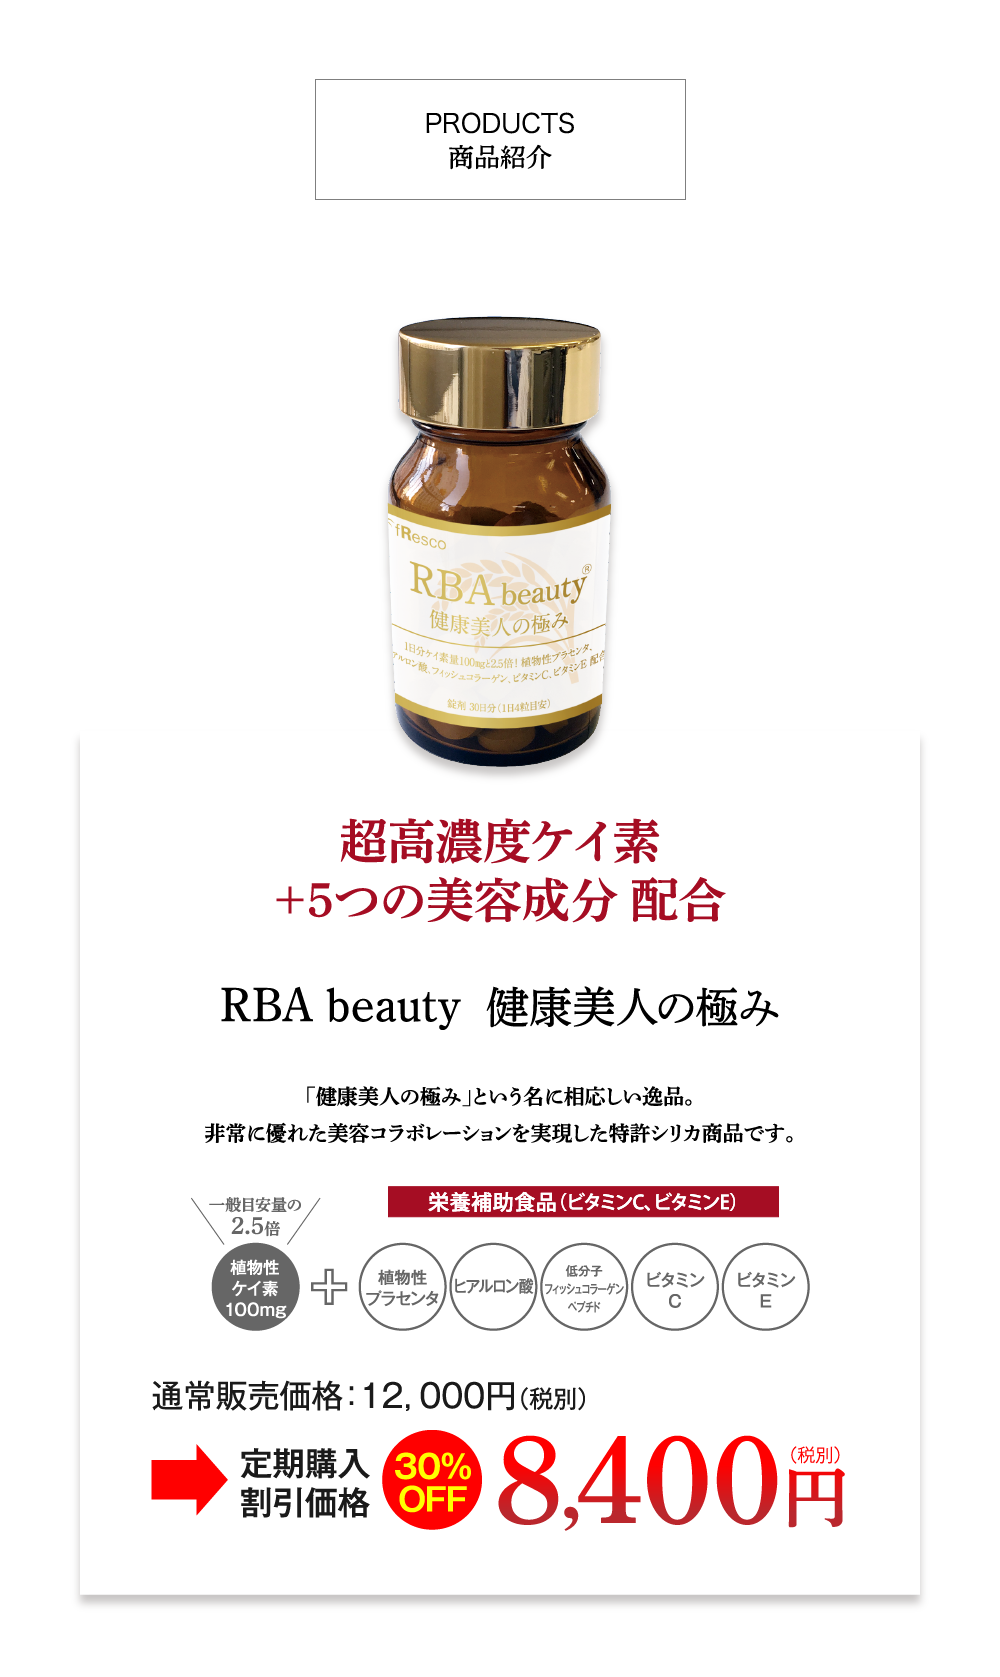 RBA Beauty商品情報